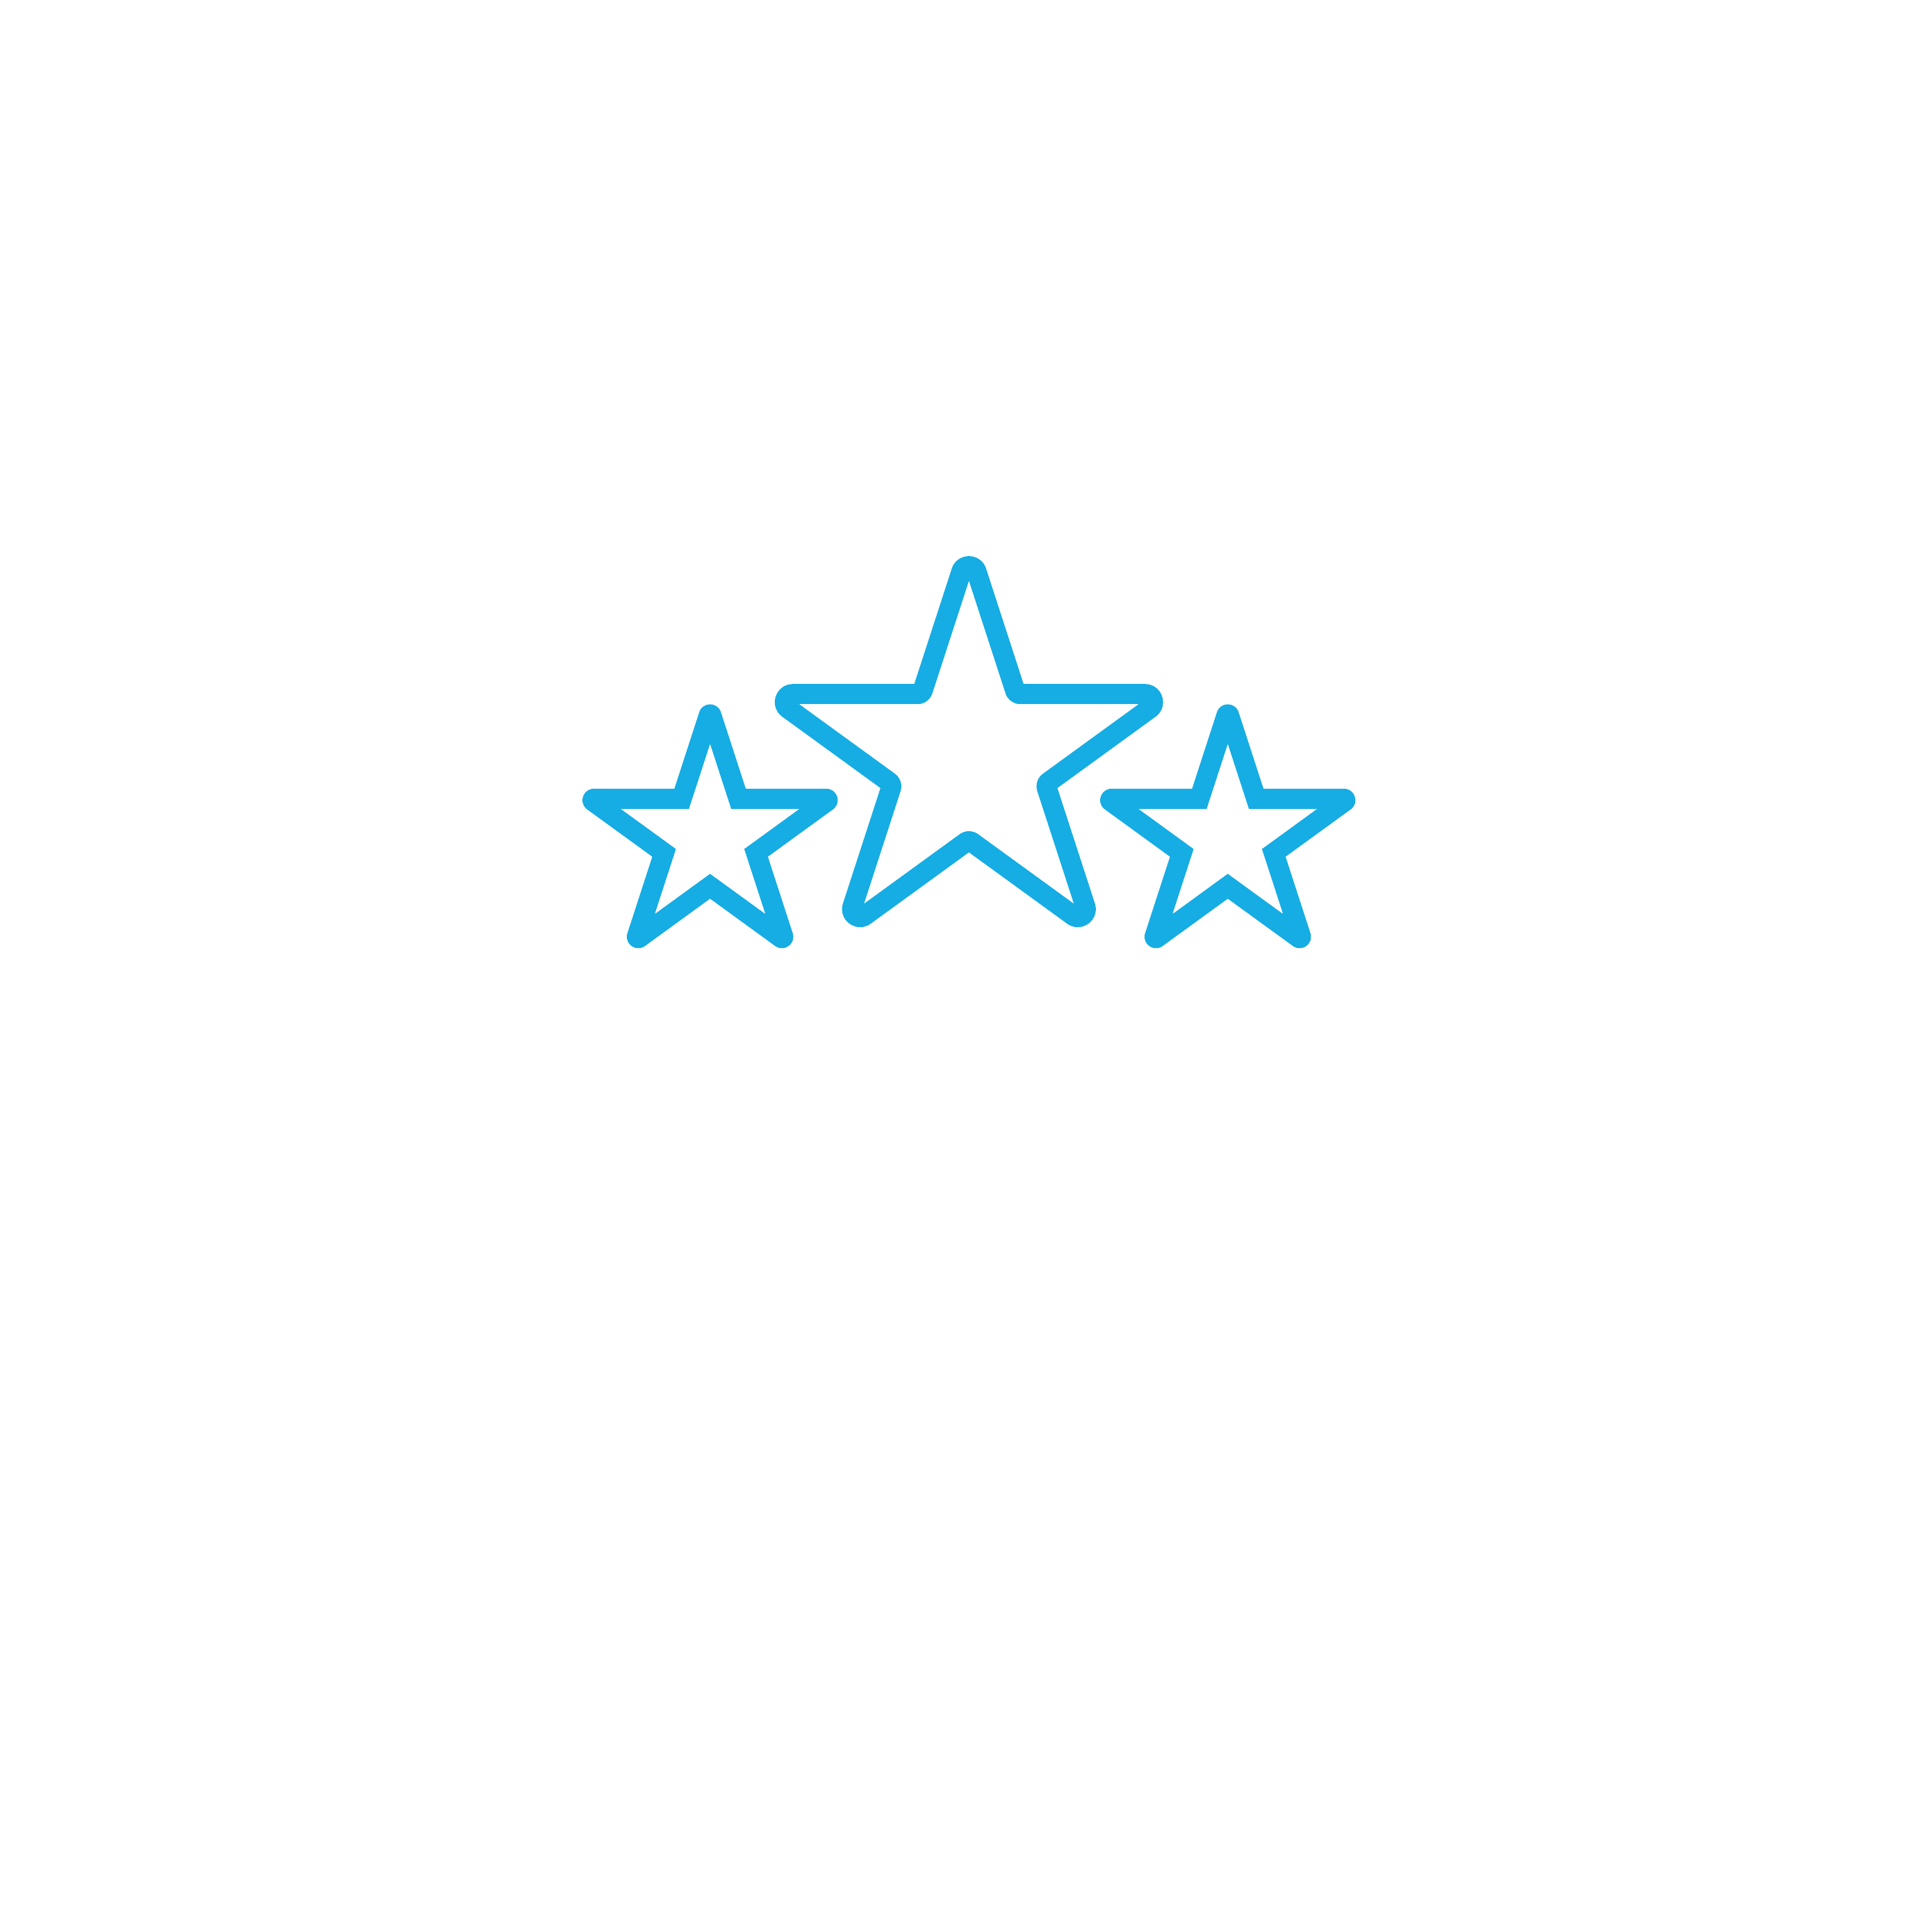 American Business Award Winner